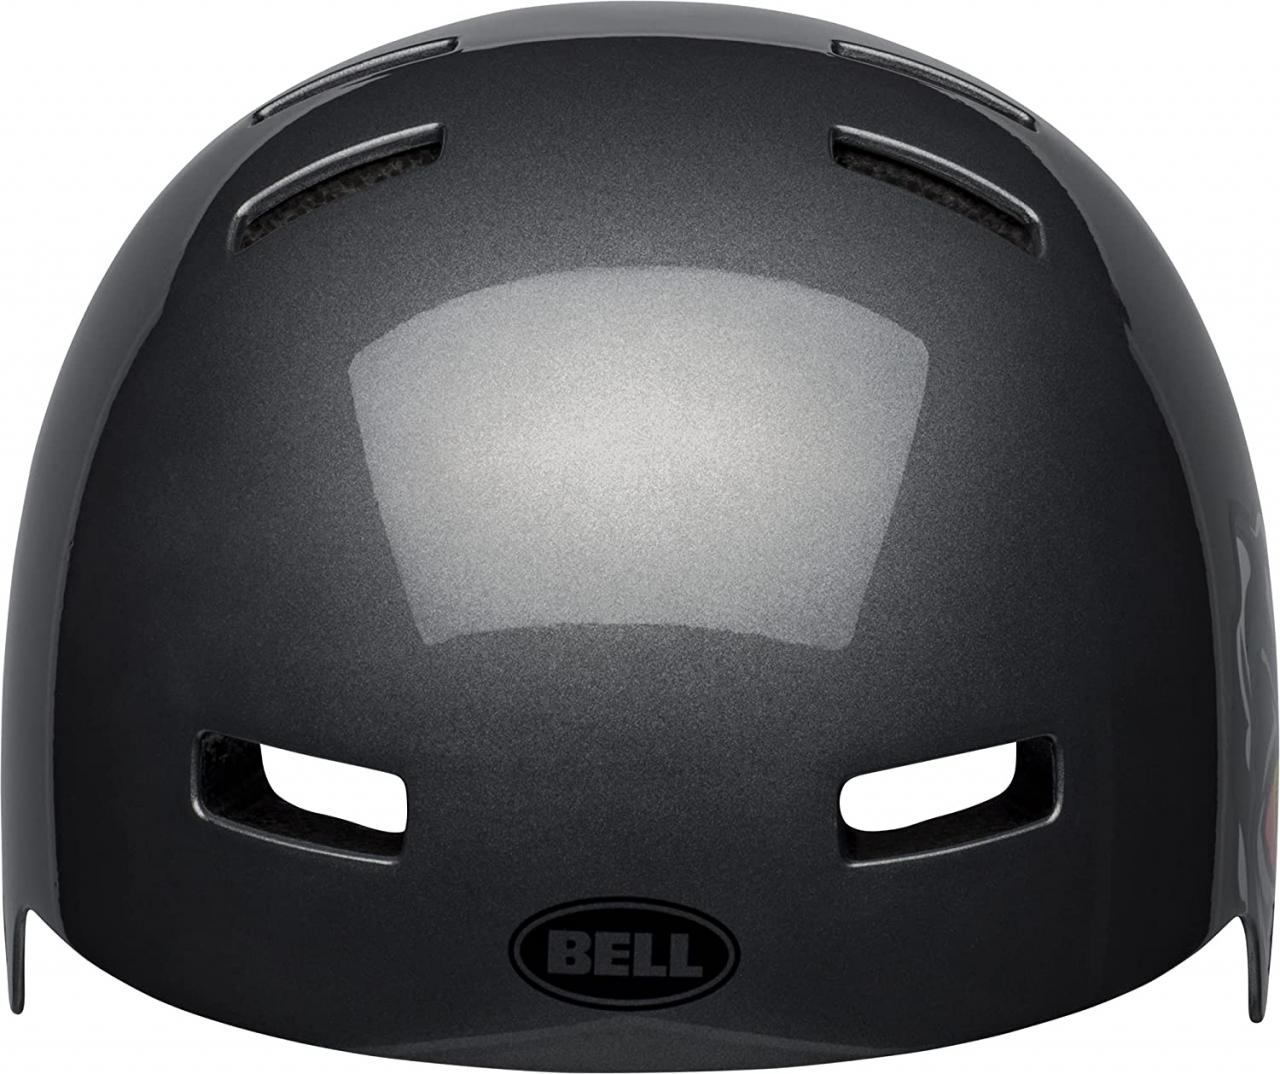 Buy BELL Local Adult BMX Bike Helmet Online in Indonesia. B08KRRD7RS